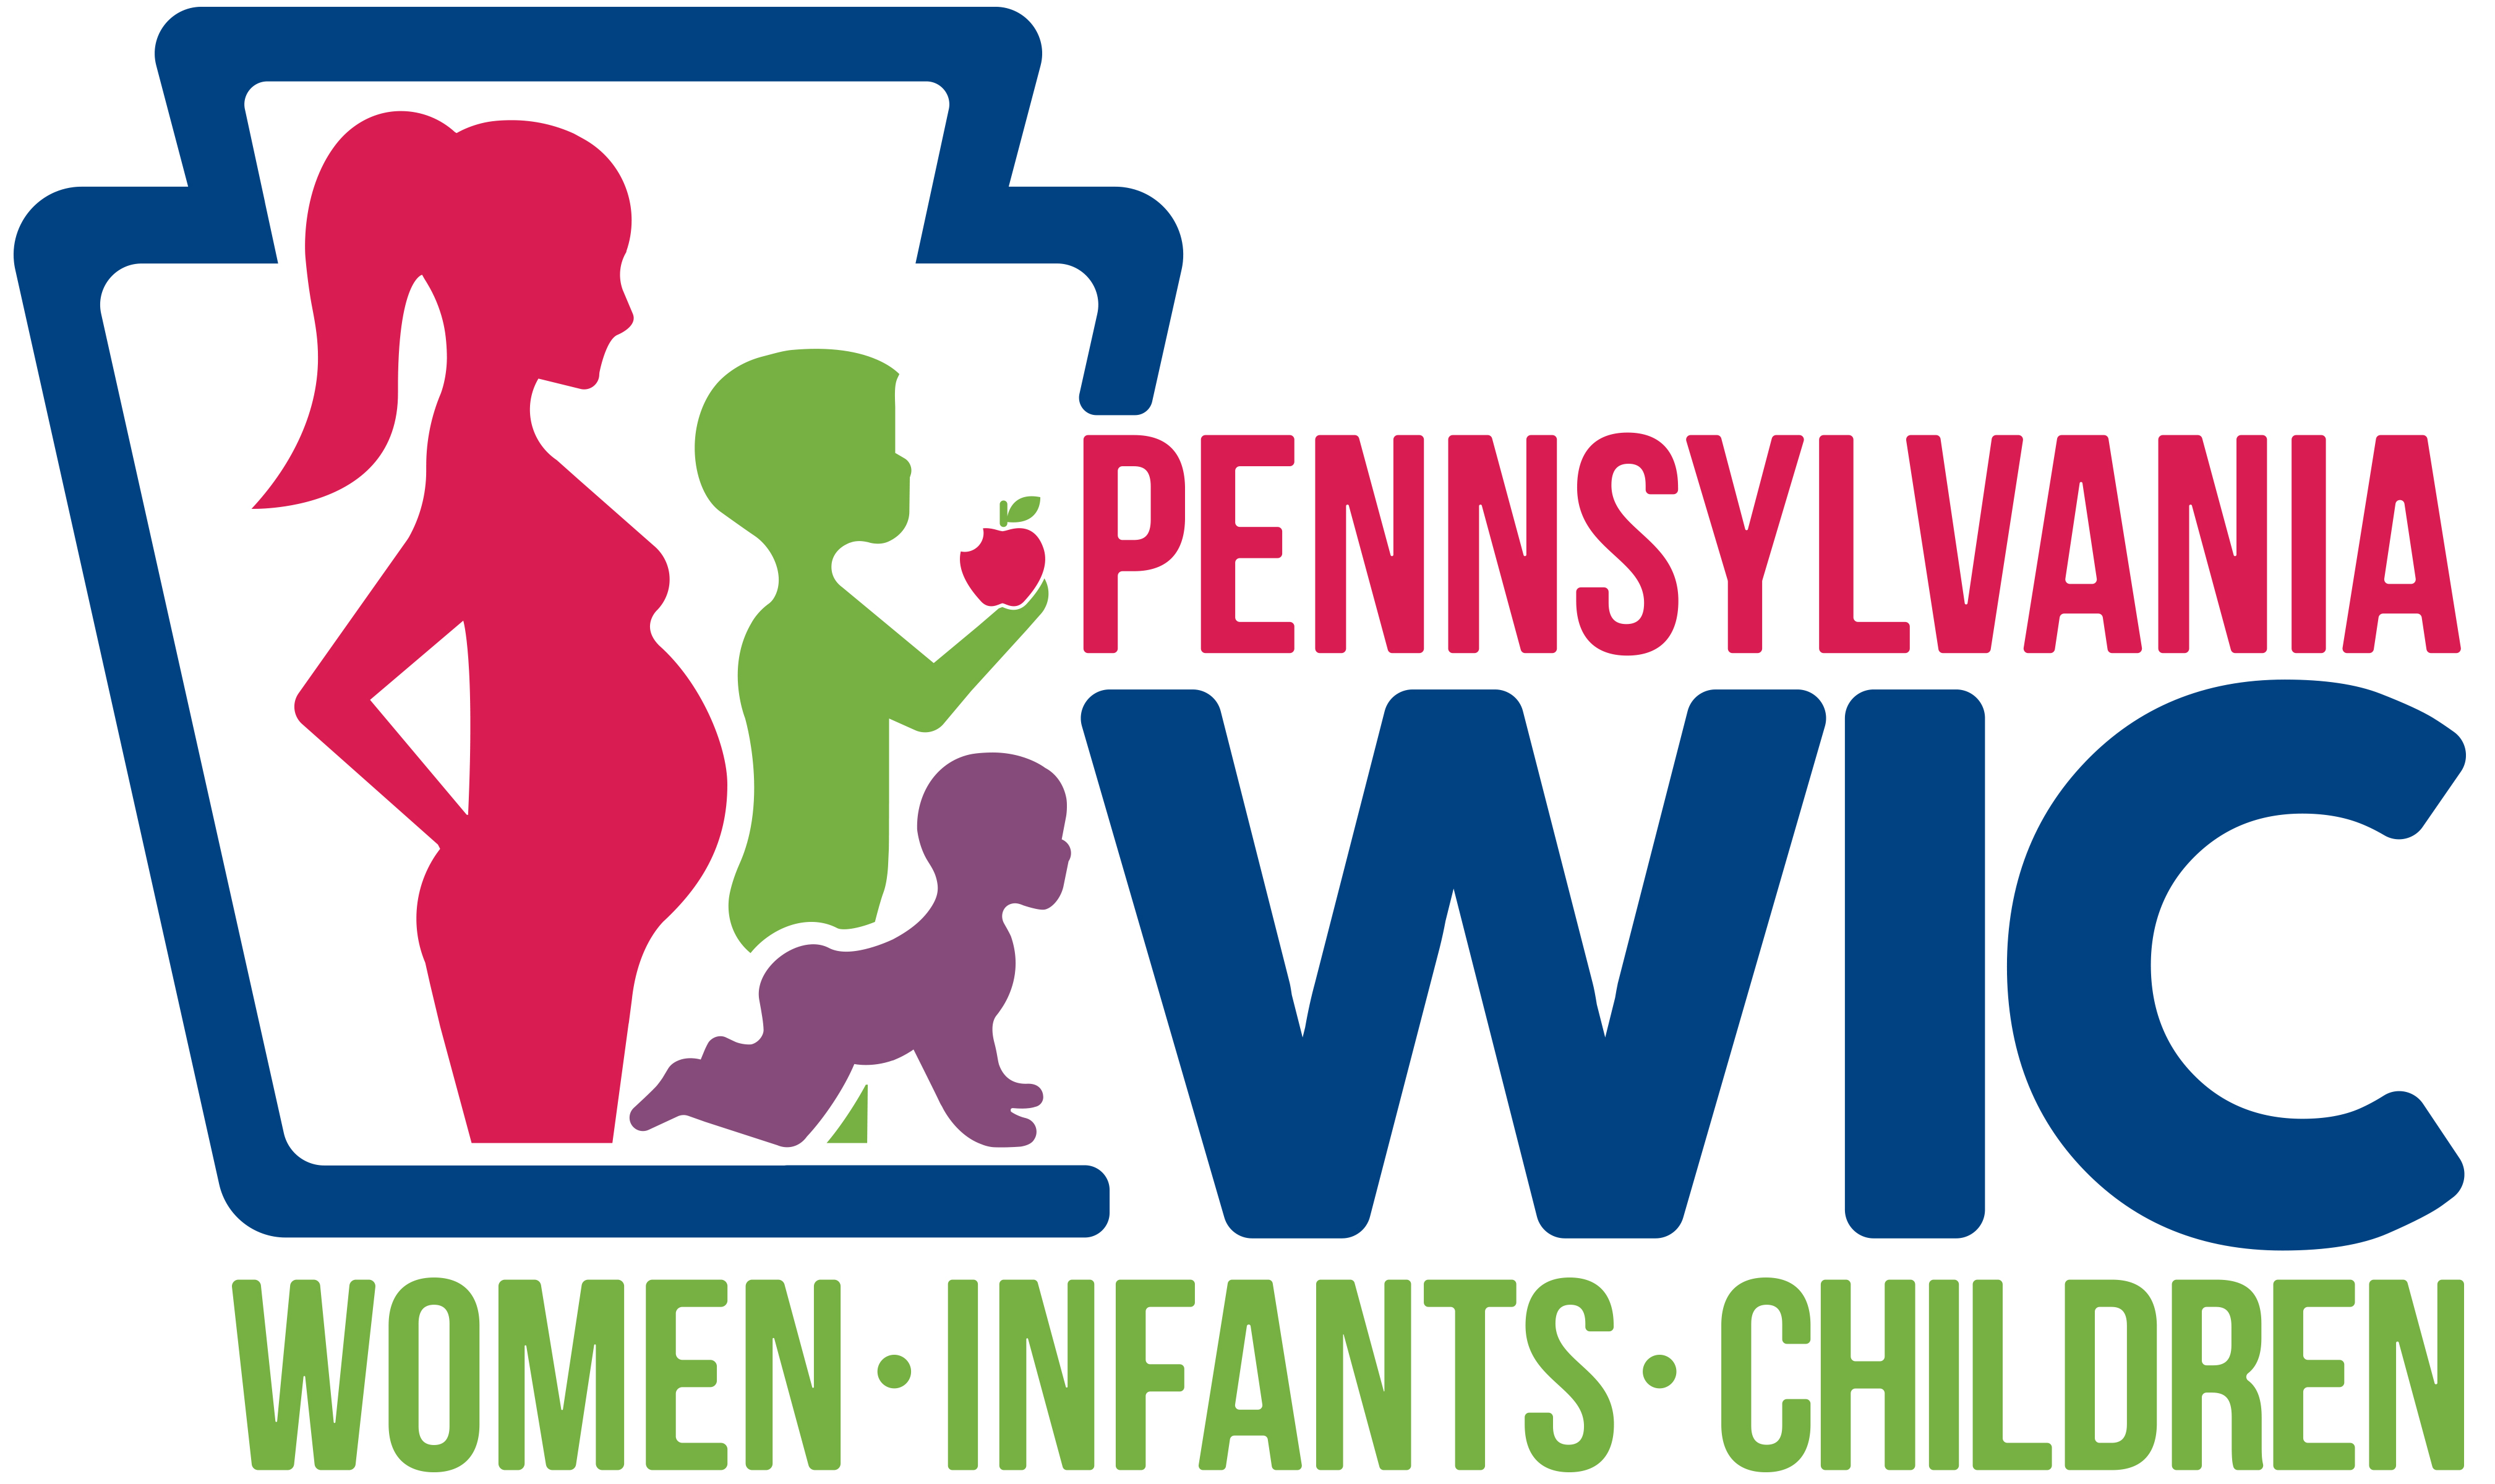 The Pennsylvania WIC logo